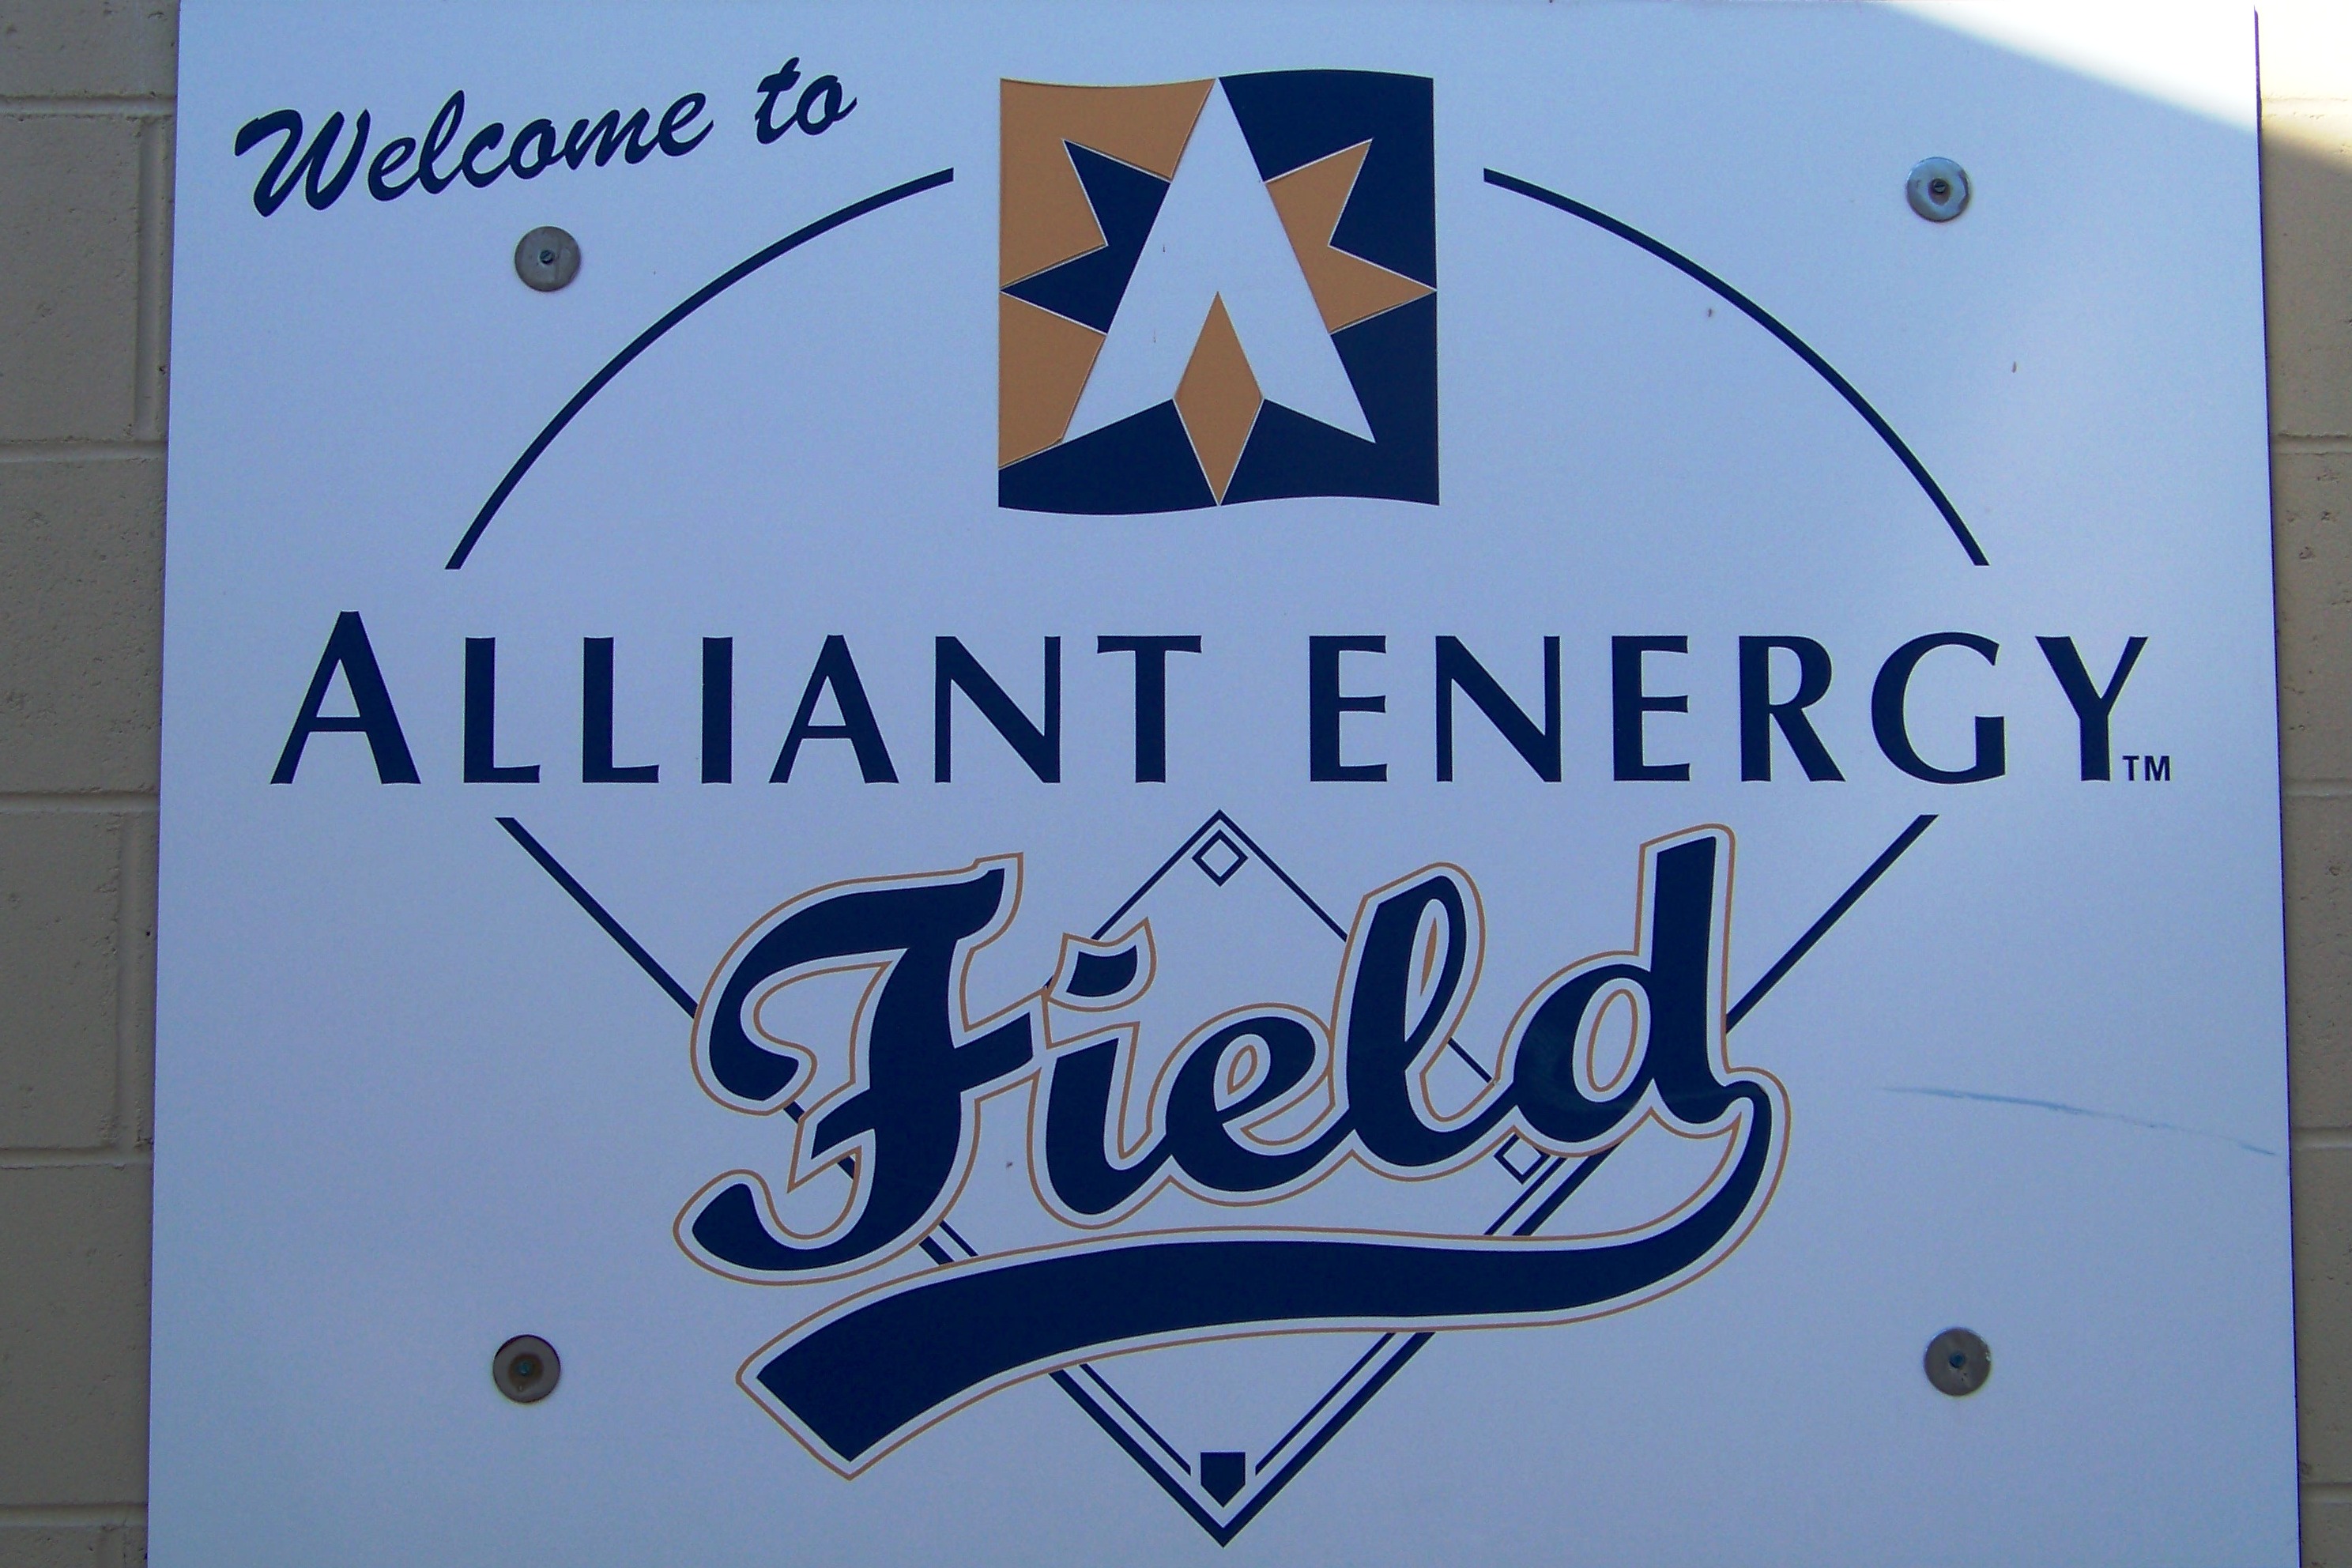 alliant energy logo